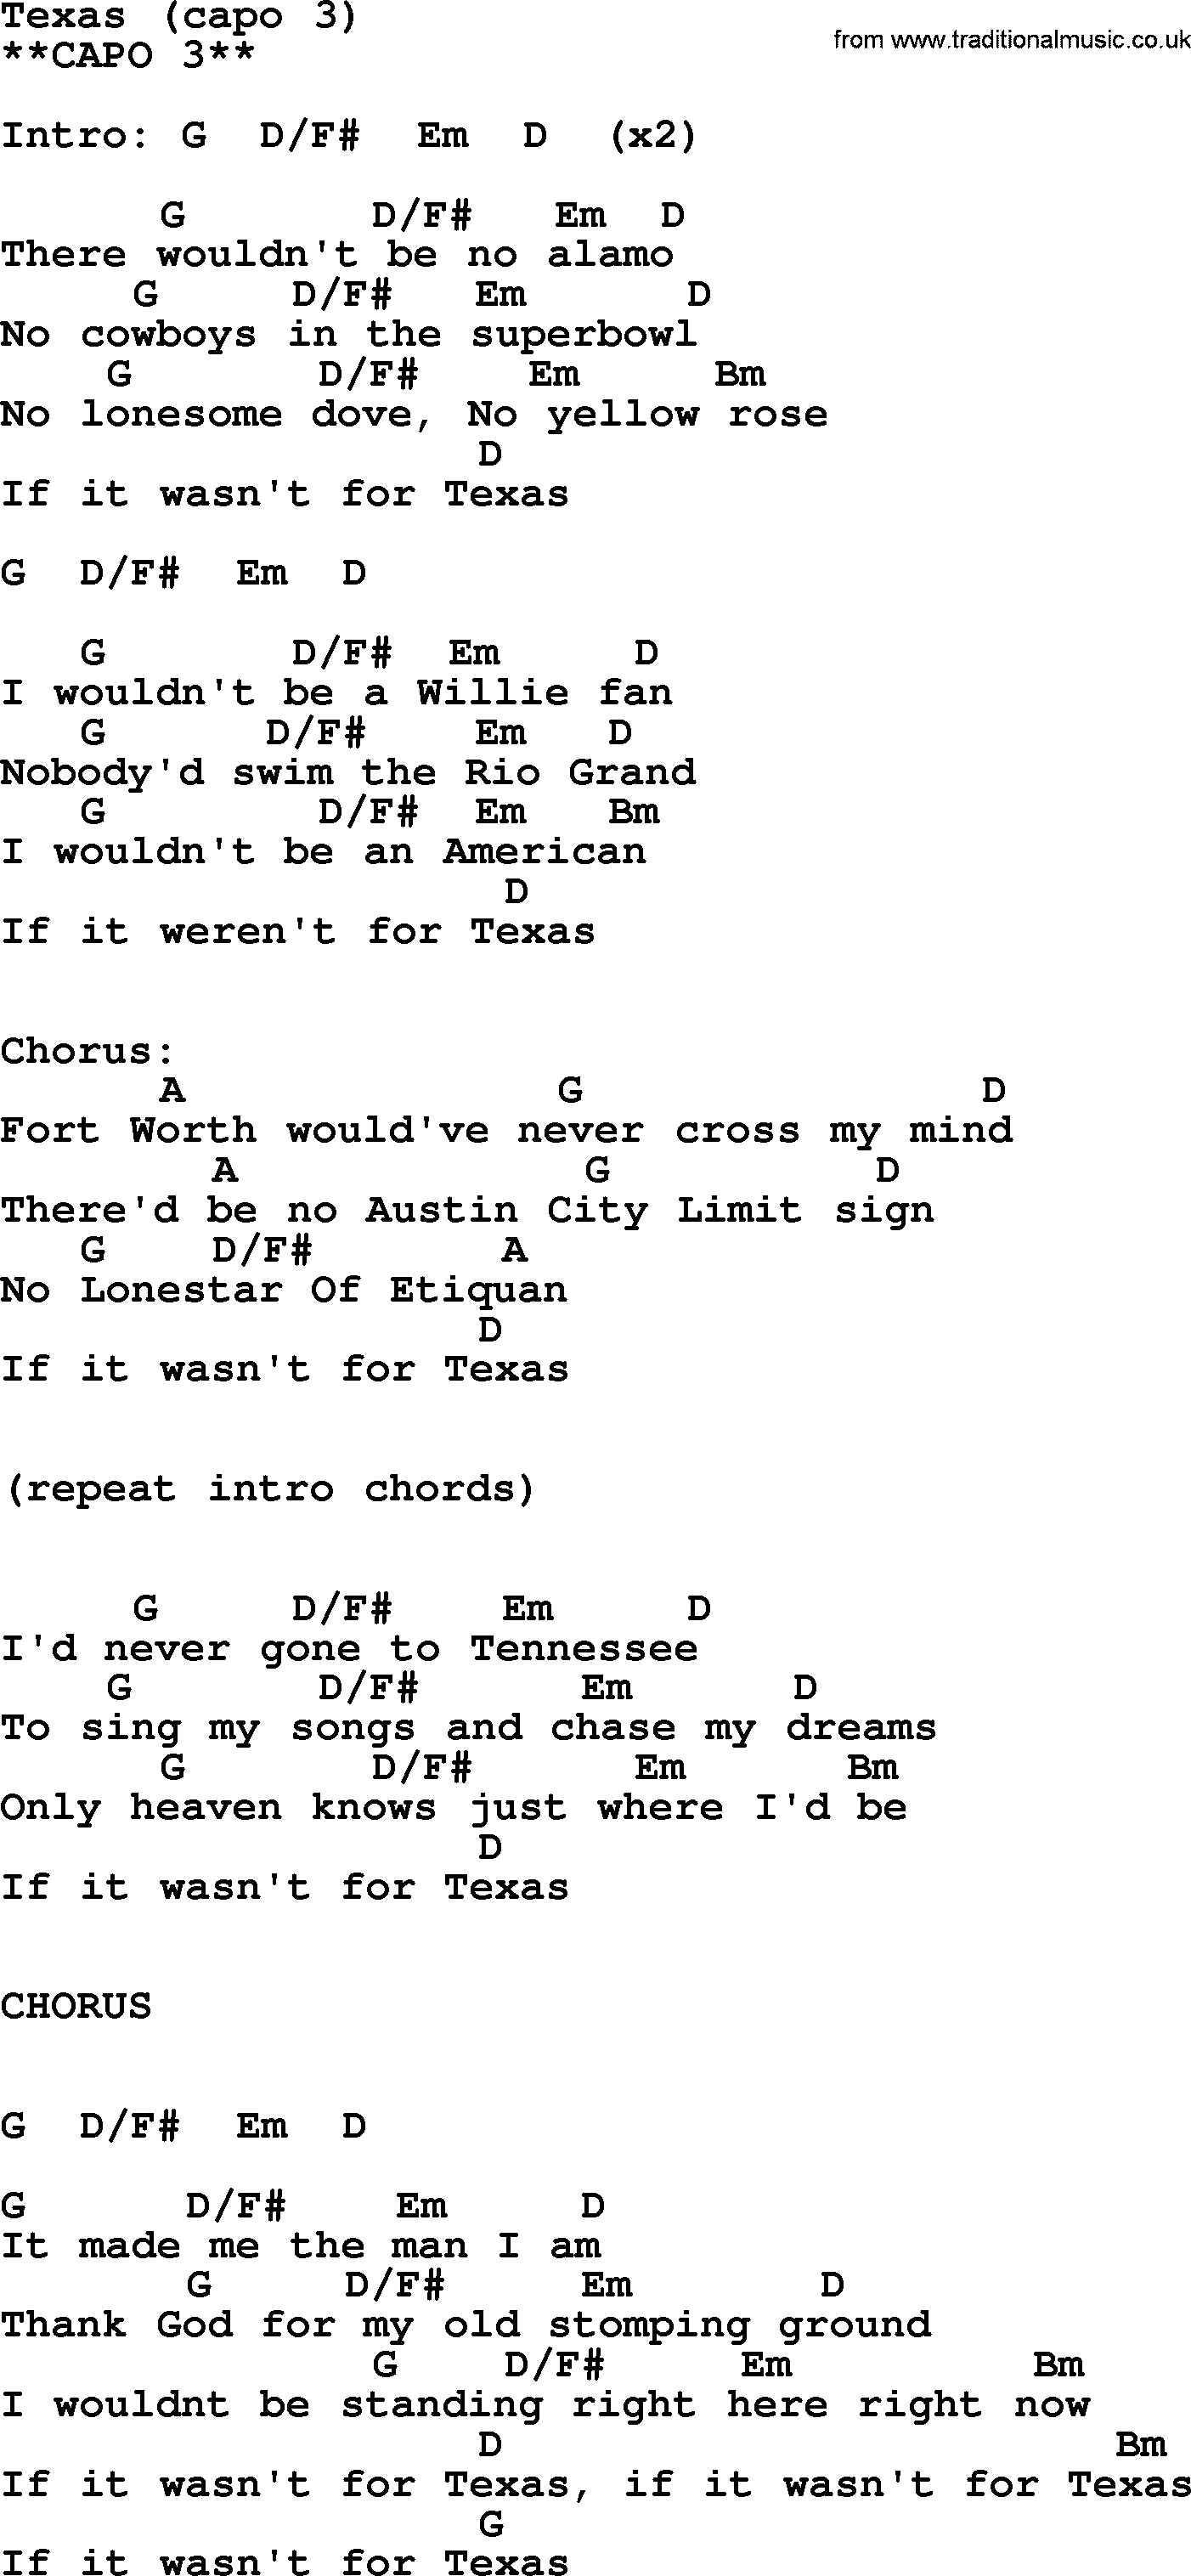 George Strait song: Texas (capo 3), lyrics and chords